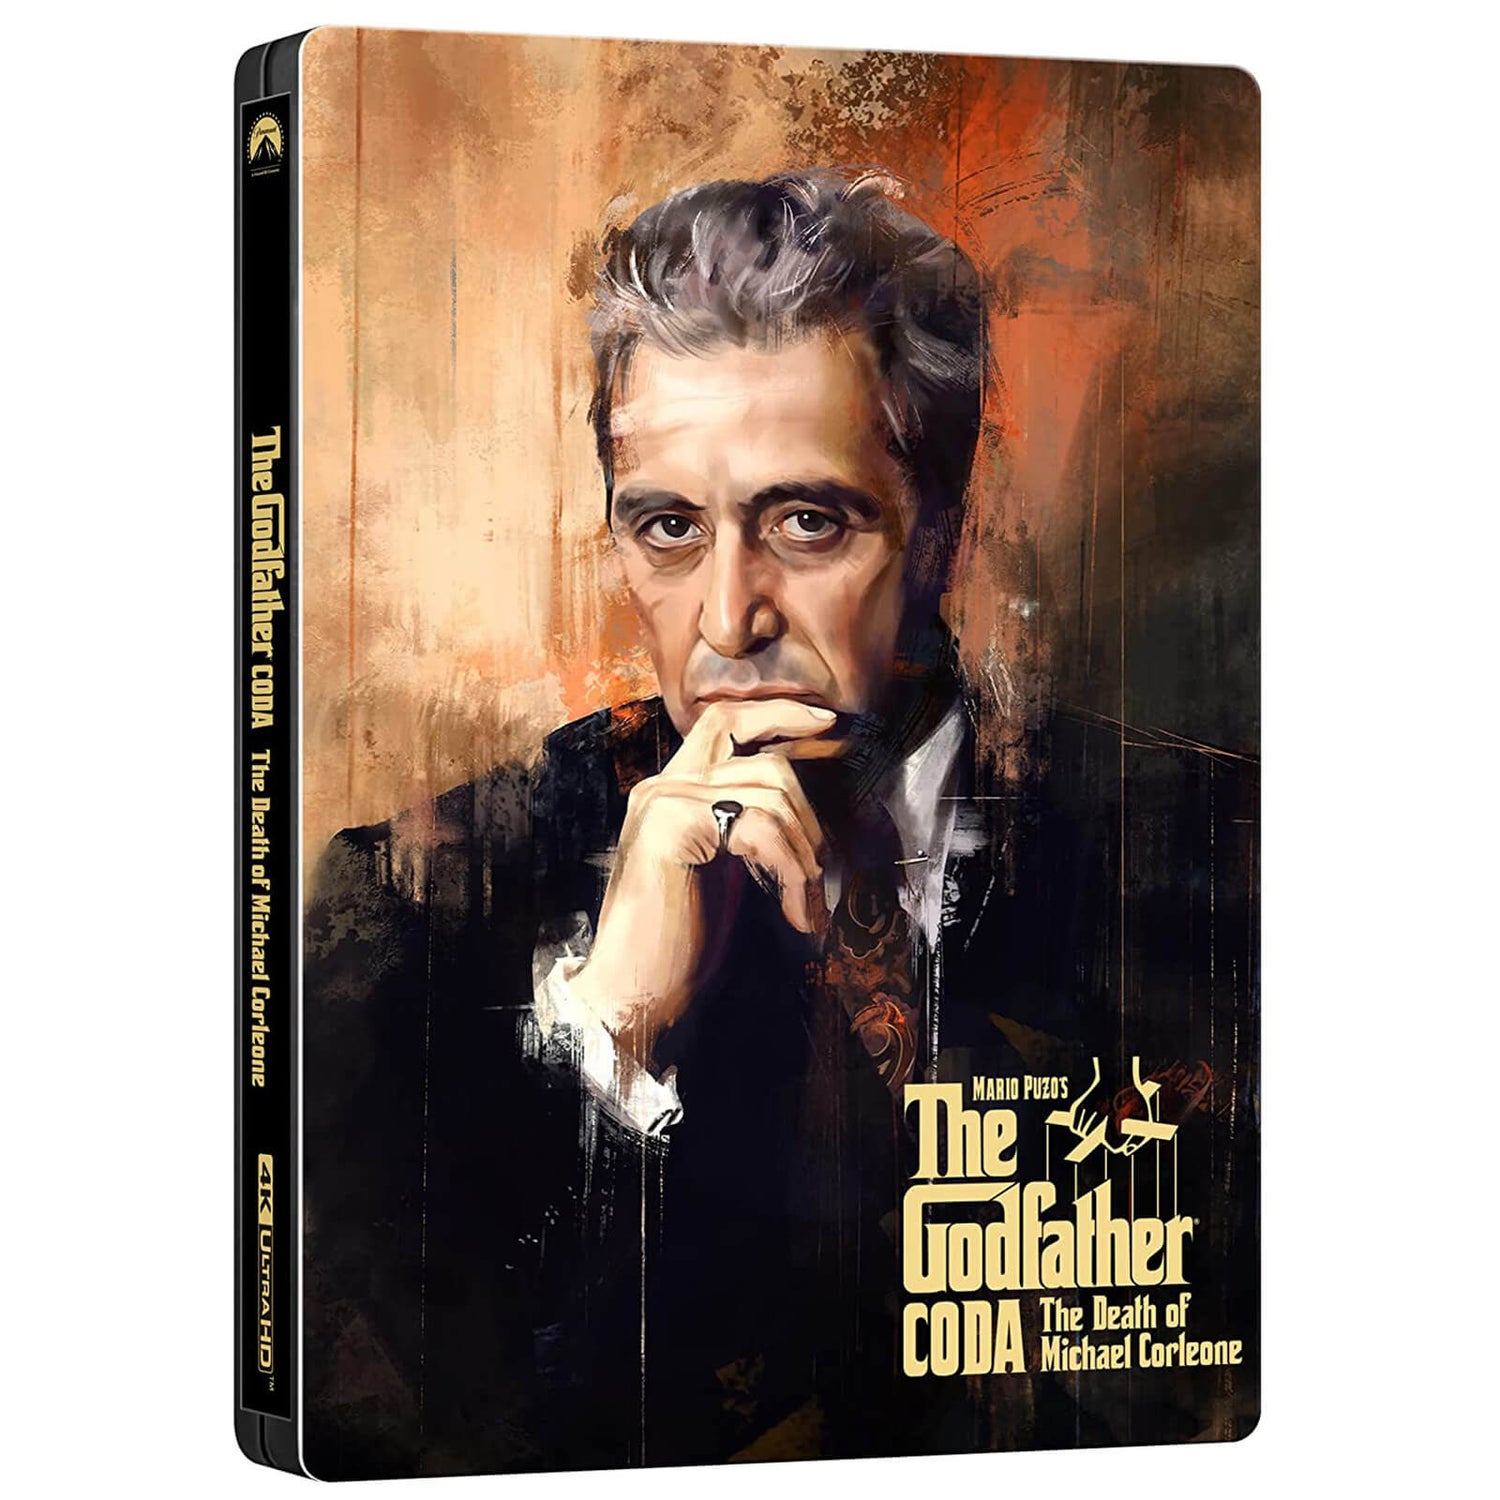 Mario Puzo's The Godfather Coda: The Death of Michael Corleone 4K Ultra HD Steelbook (Includes Digital)